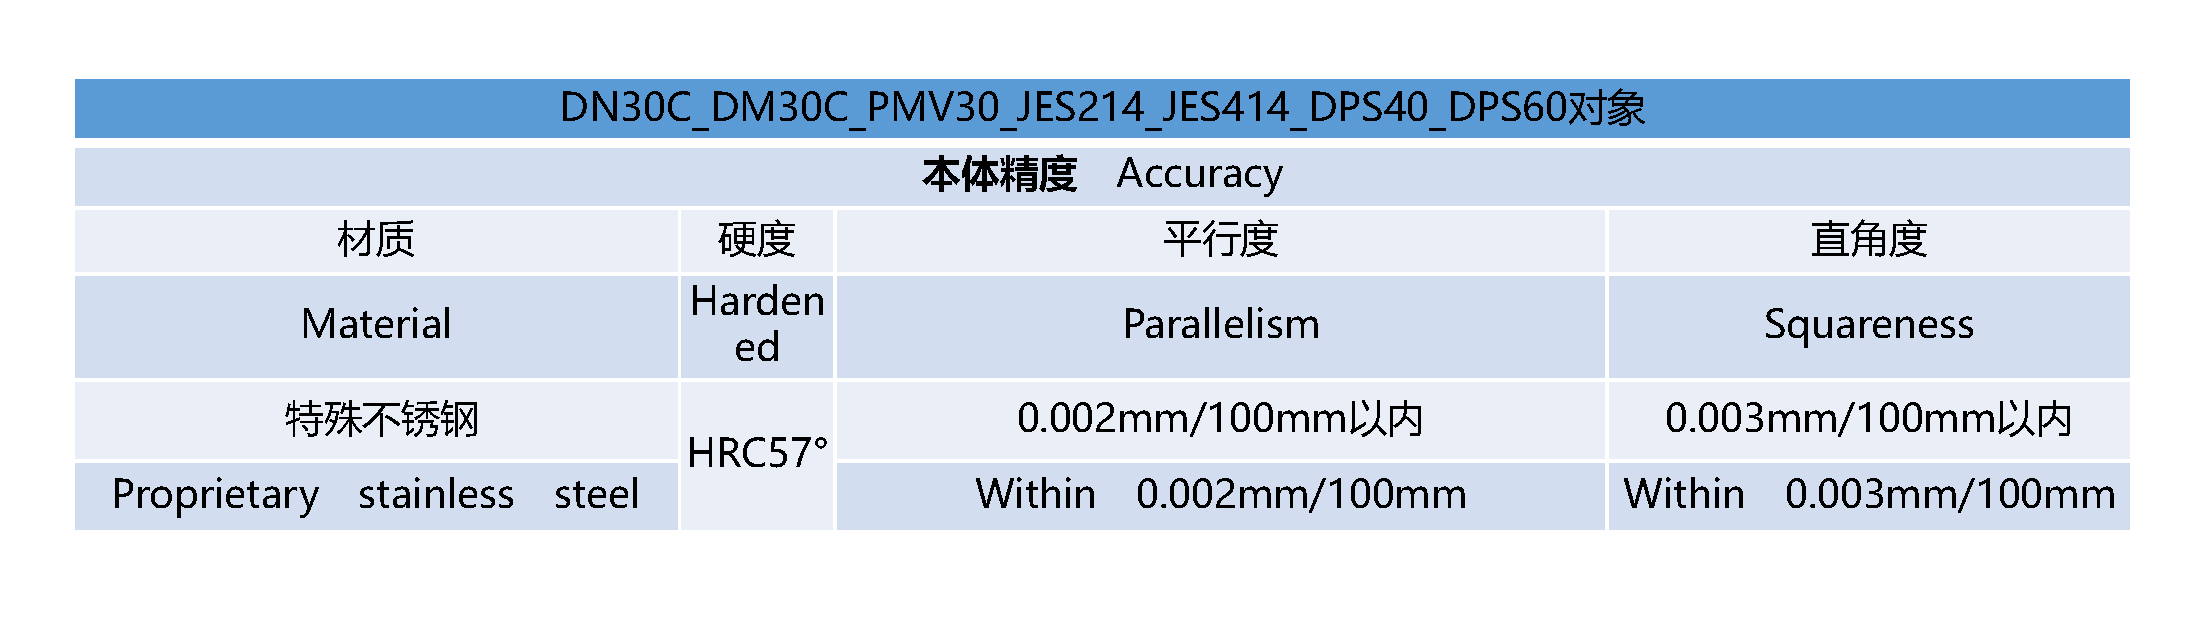 DN30C_DM30C_PMV30_JES214_JES414_DPS40_DPS60_精度表- 中文.png